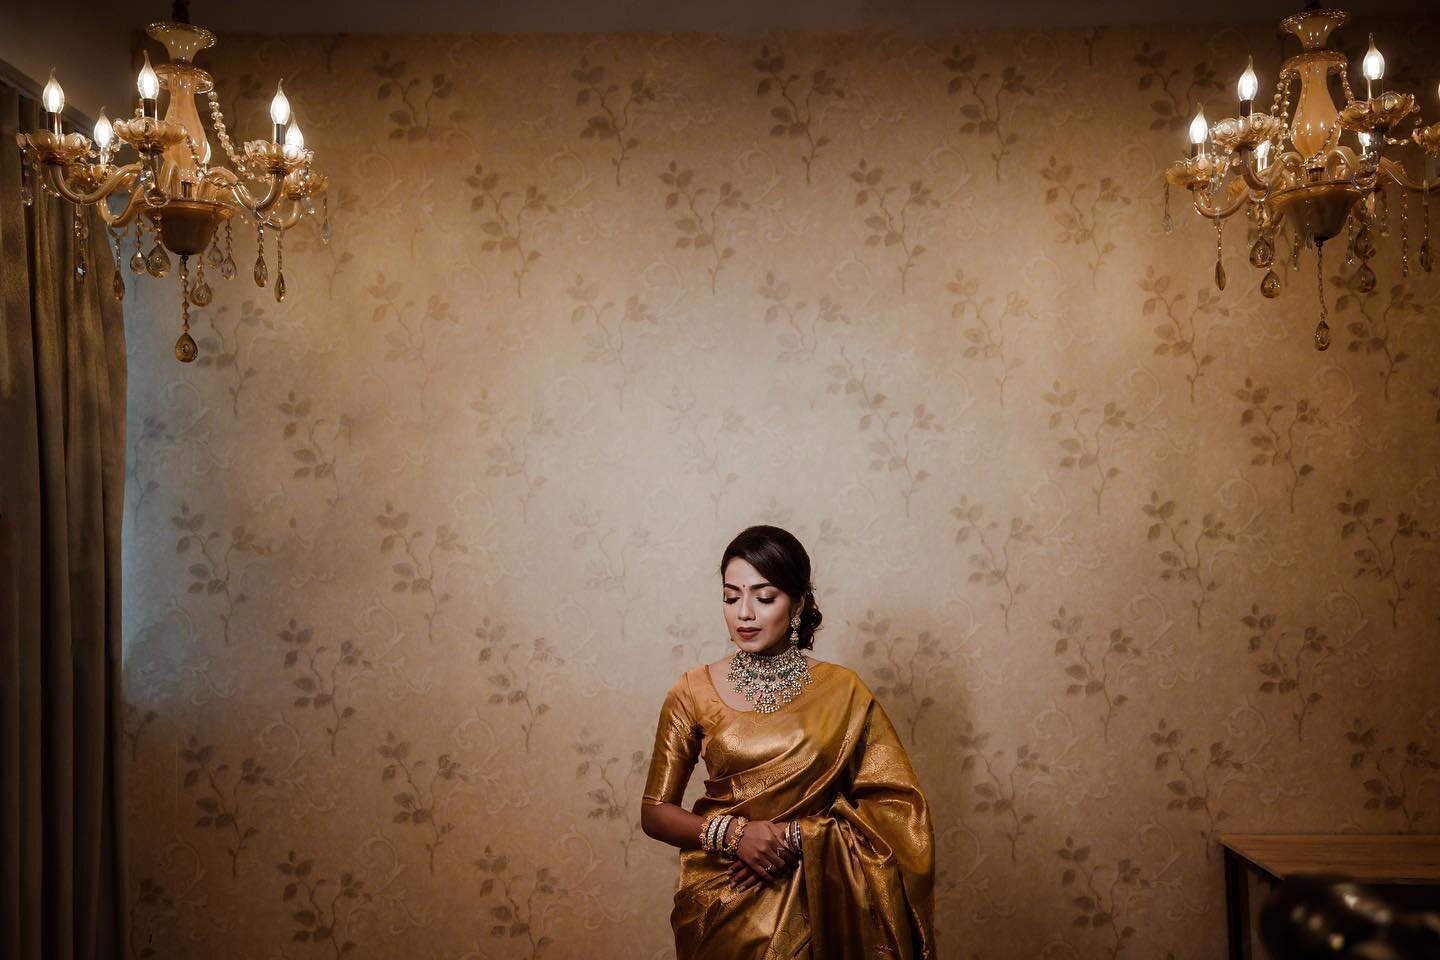 ✨✨Chinmaya✨✨
.
.
.
#BridesofMangaluru #BridesofIndia #indianbride
#GroomsofMangaluru #GroomsofIndia #Indiangrooms
#Bride #groom #indiagroom #Indianbride
#Weddingphotography #IndianWedding #Weddingshoot #Candidshoot #candidphotography #weddingcandids
